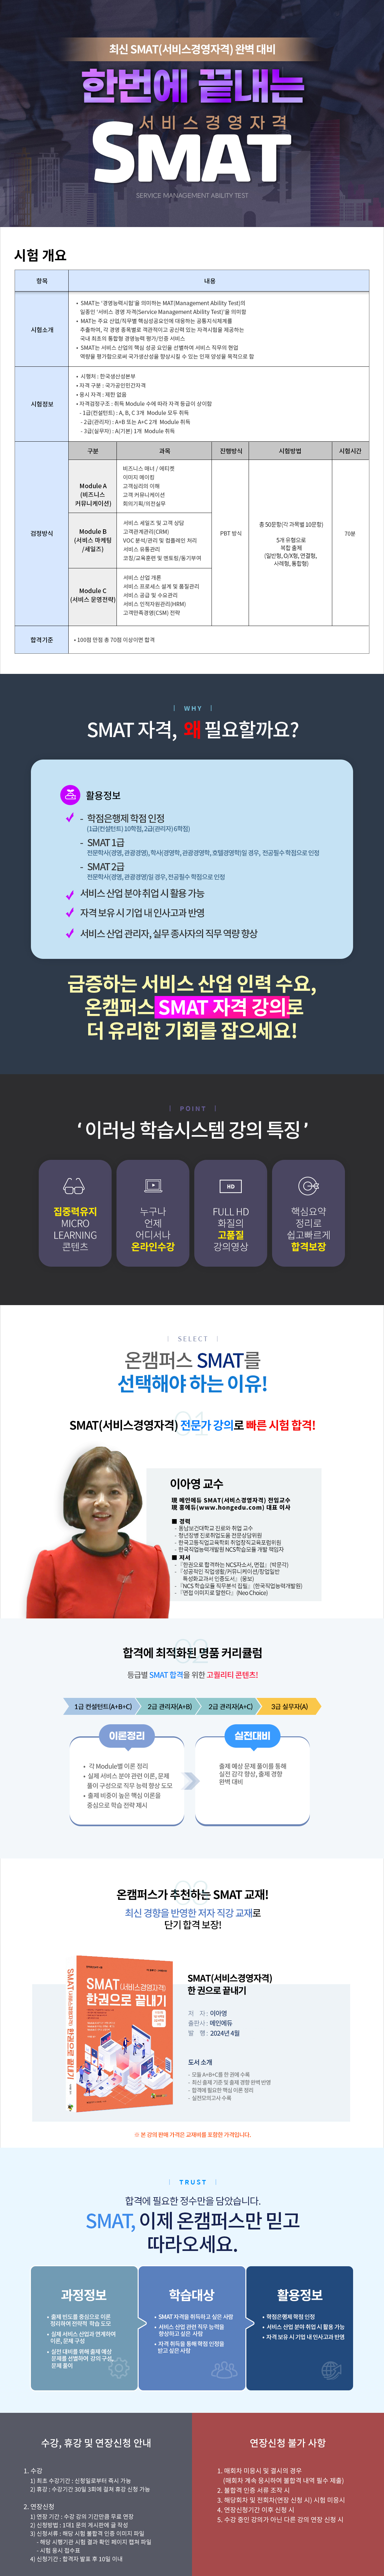 SMAT-상세정보페이지-수정-최종완료.jpg